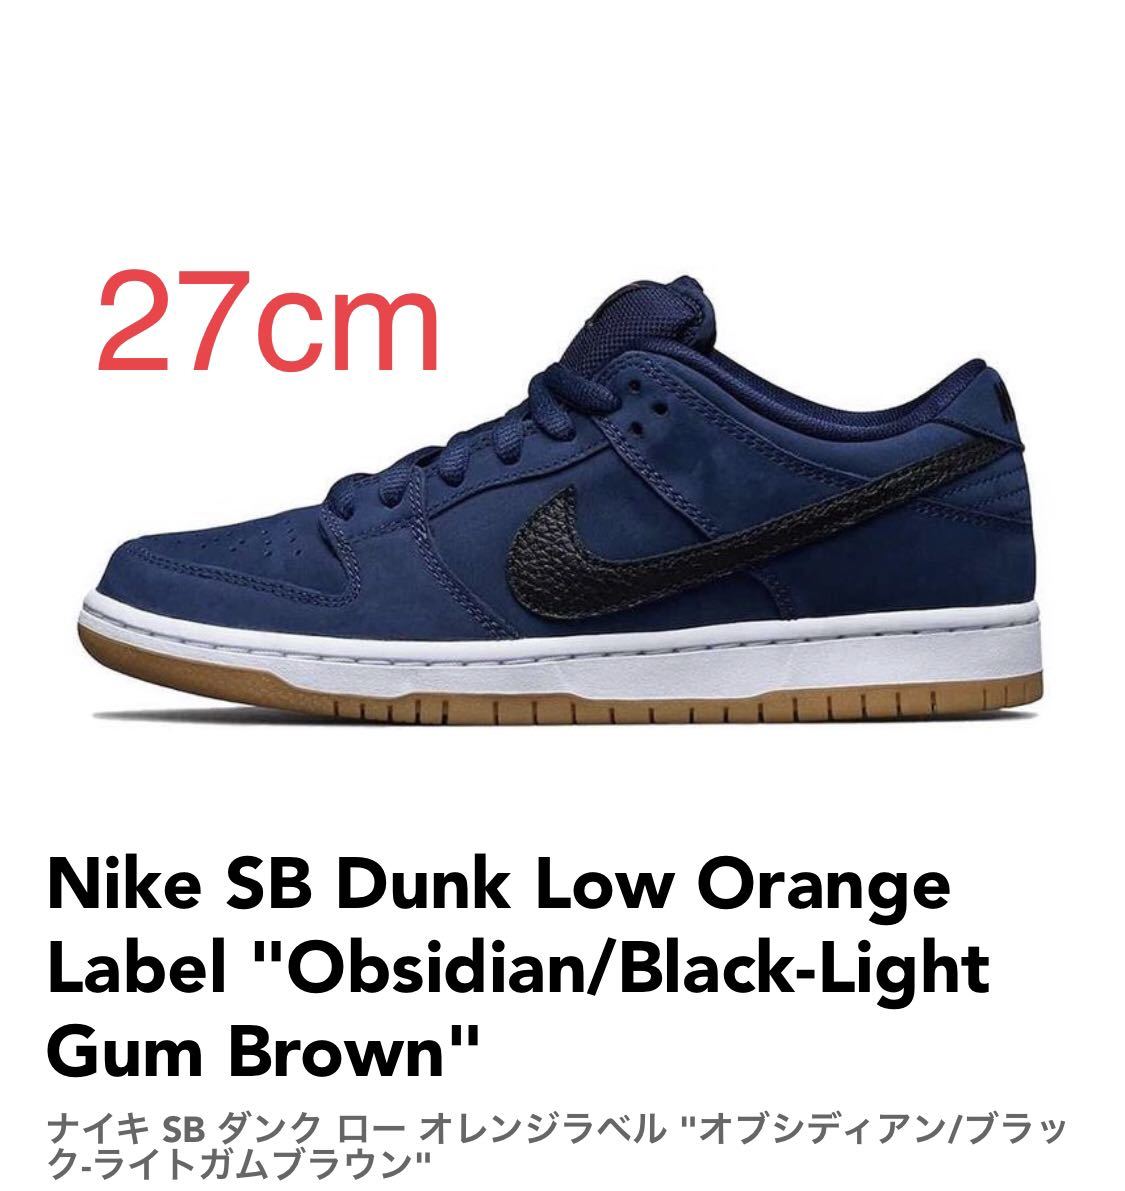 Nike SB Dunk Low Orange Label Obsidian/Black-Light Gum Brown オブシディアン/ブラック-ライトガムブラウン CW7463-401 27cm US9